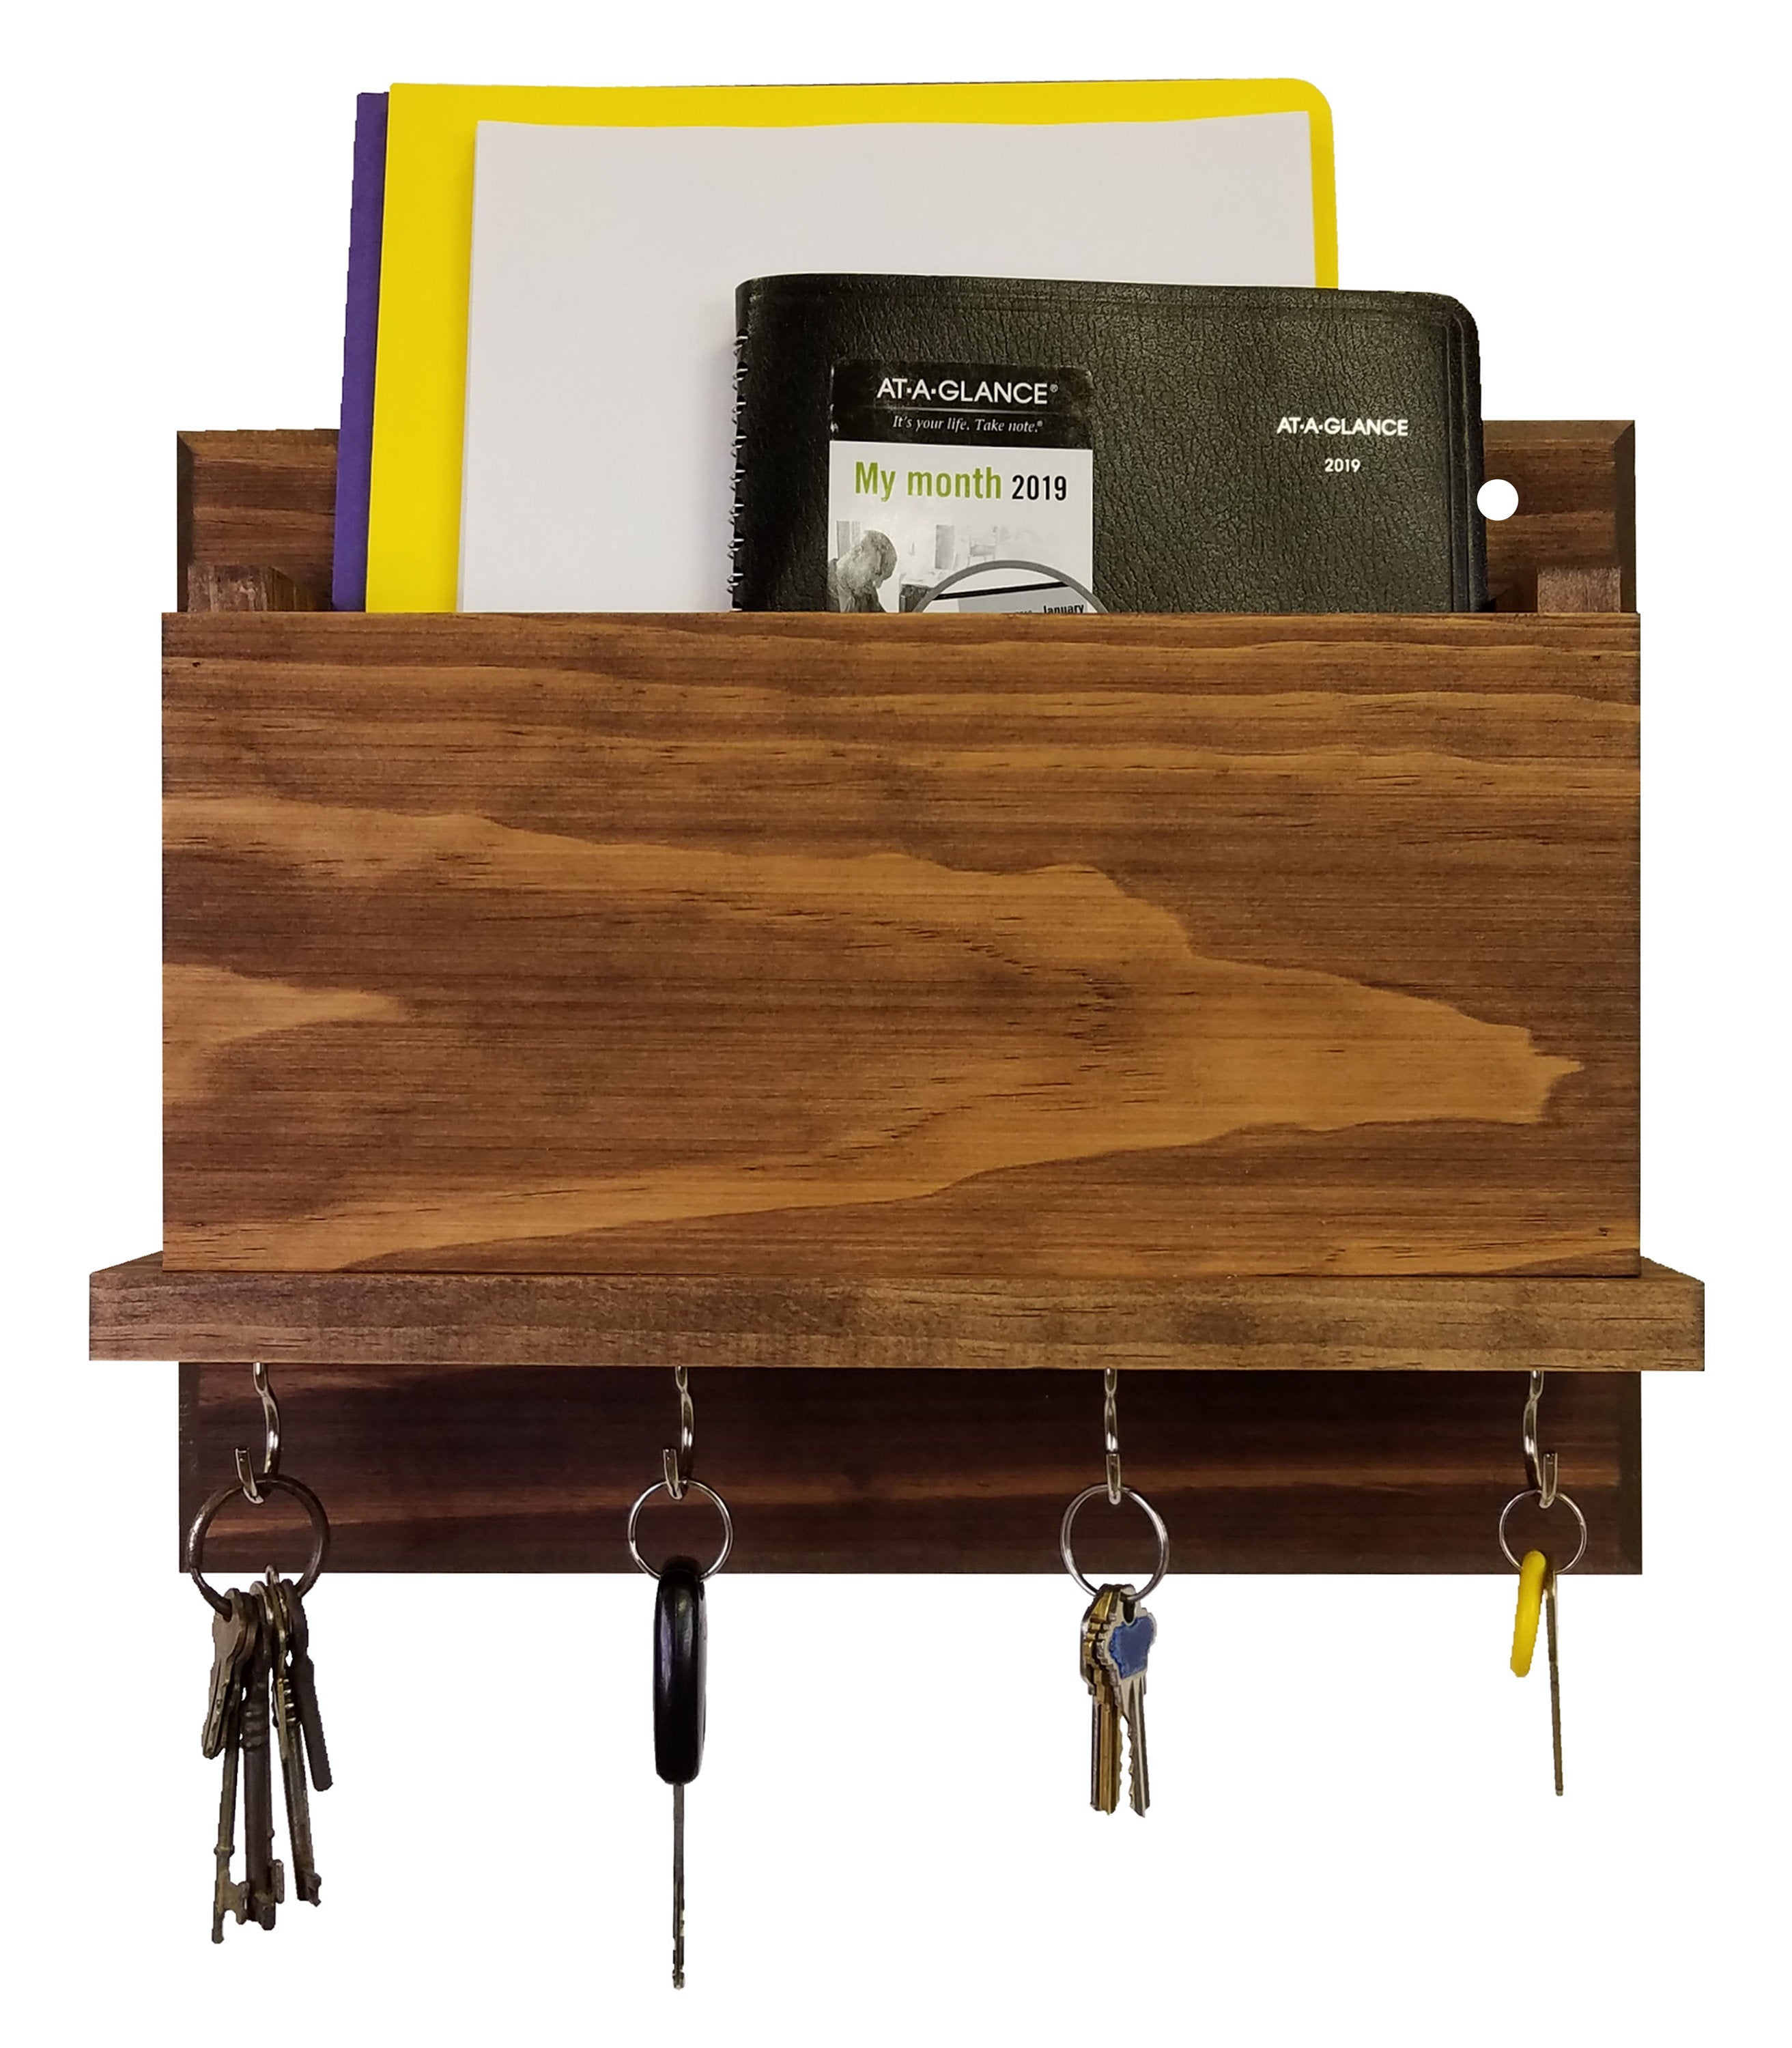 Wood Key Mail Holder Wall-Mounted - Key Holder with 5 Vintage Key Hooks,  Key Holder for Wall Decorative, Rustic Key Hanger, Key Rack for Leash, Mail